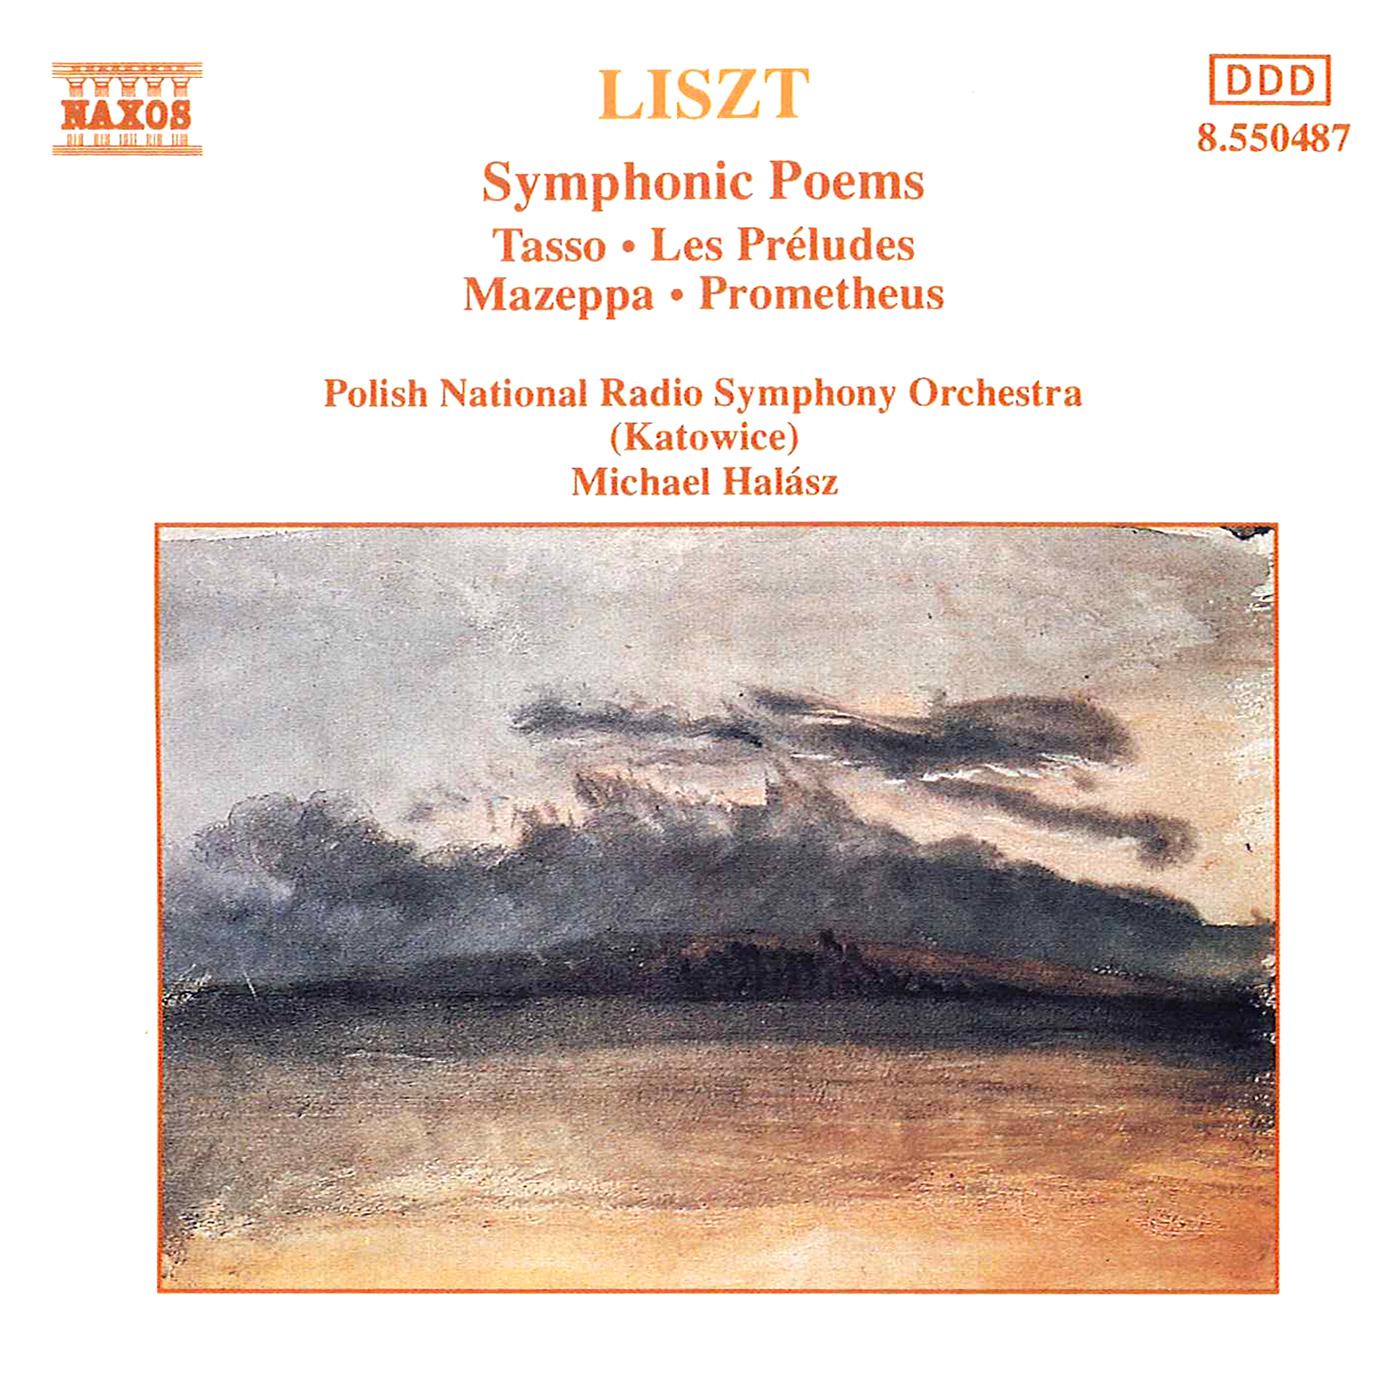 LISZT: Symphonic Poems, Vol. 1